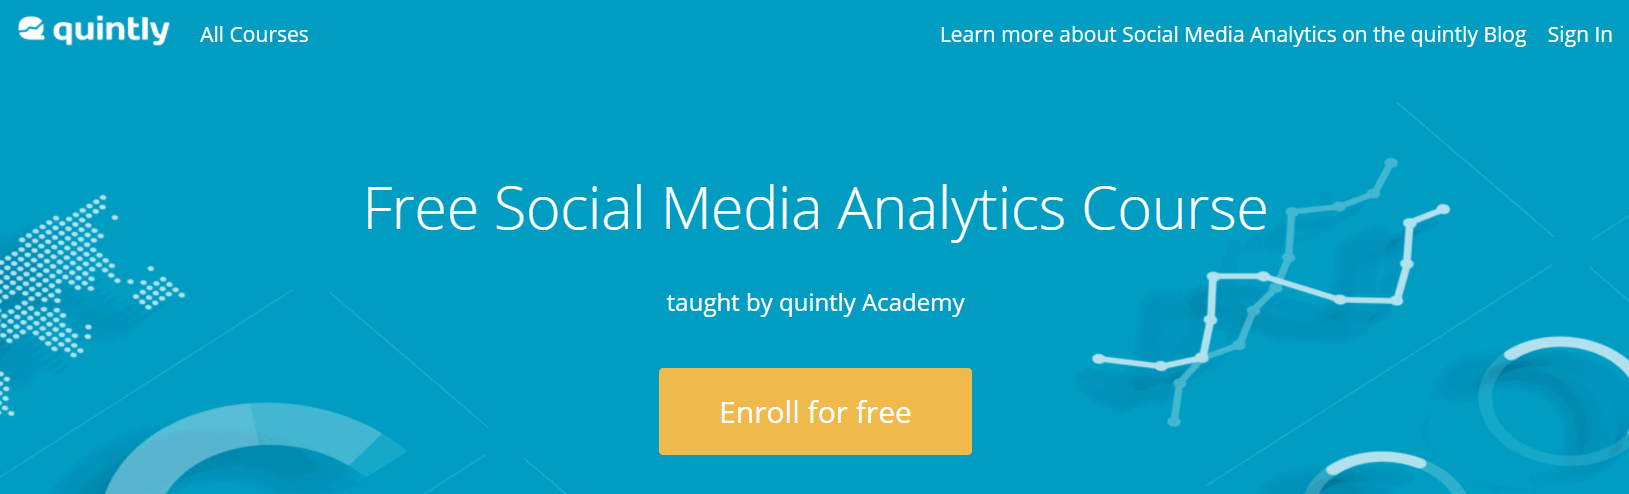 Free Social Media Analytics Course 